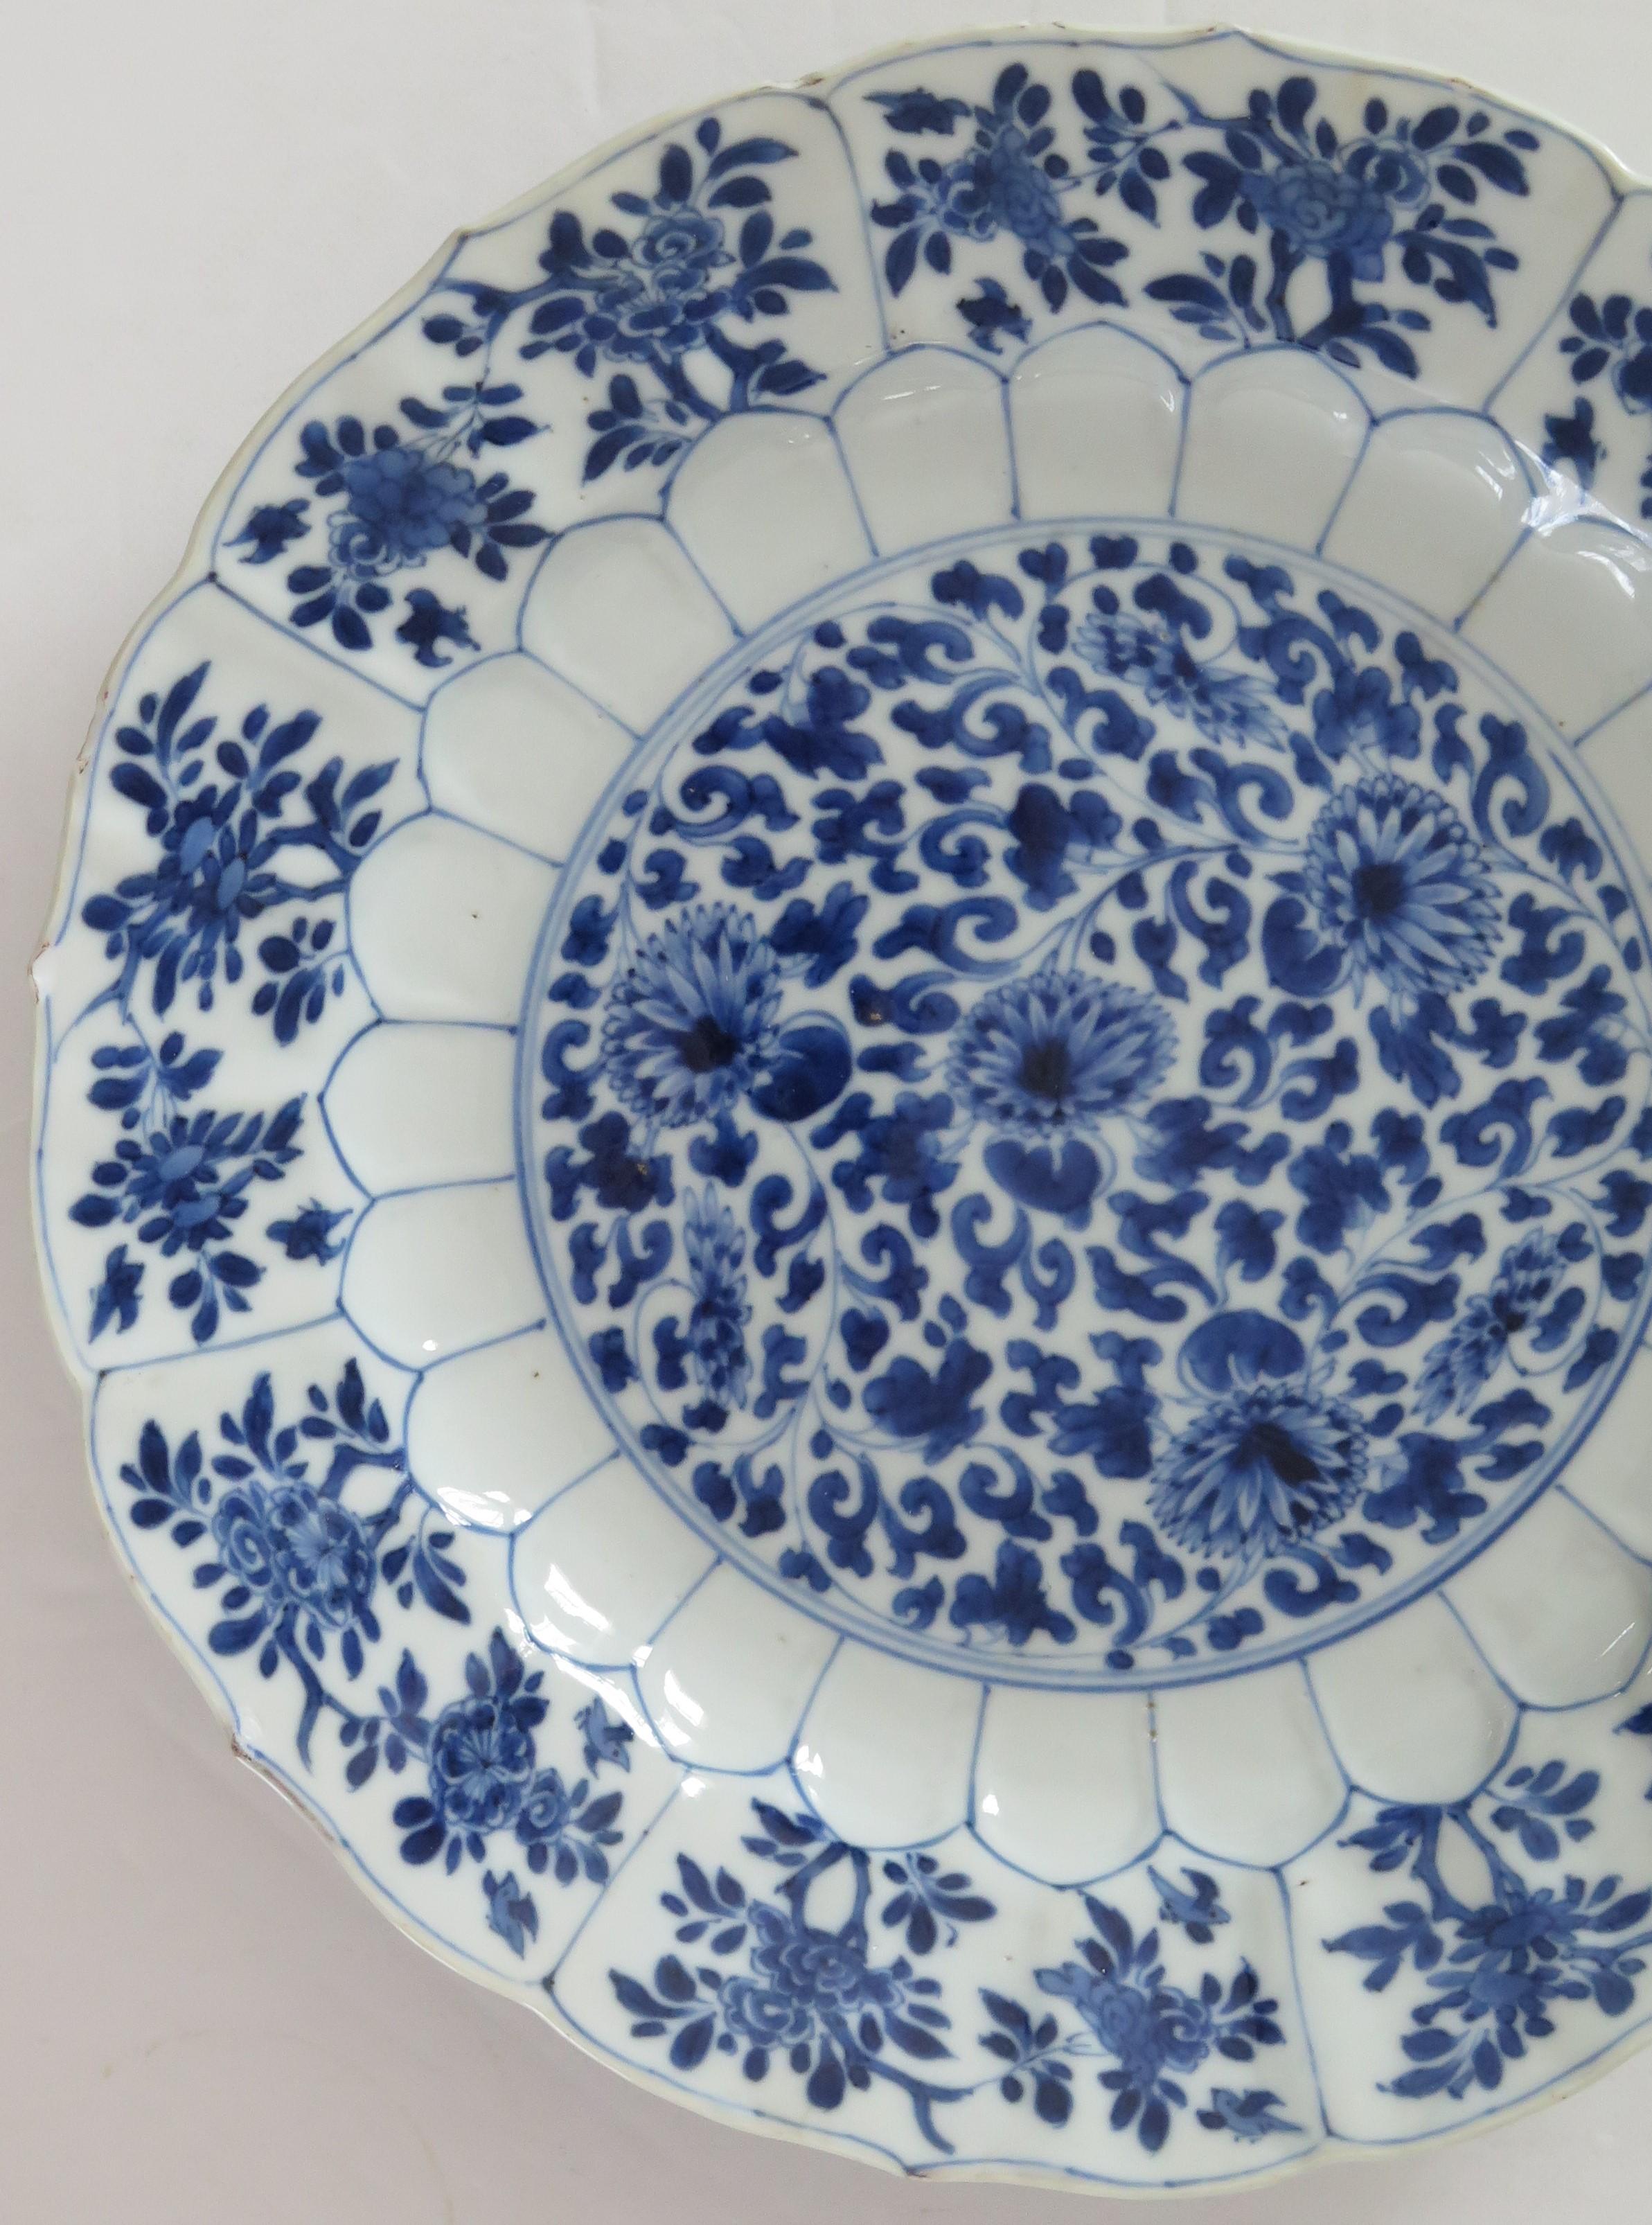 17th Century Qing Kangxi Chinese Porcelain Plate Blue & White Mark & Period Pl 2, circa 1680